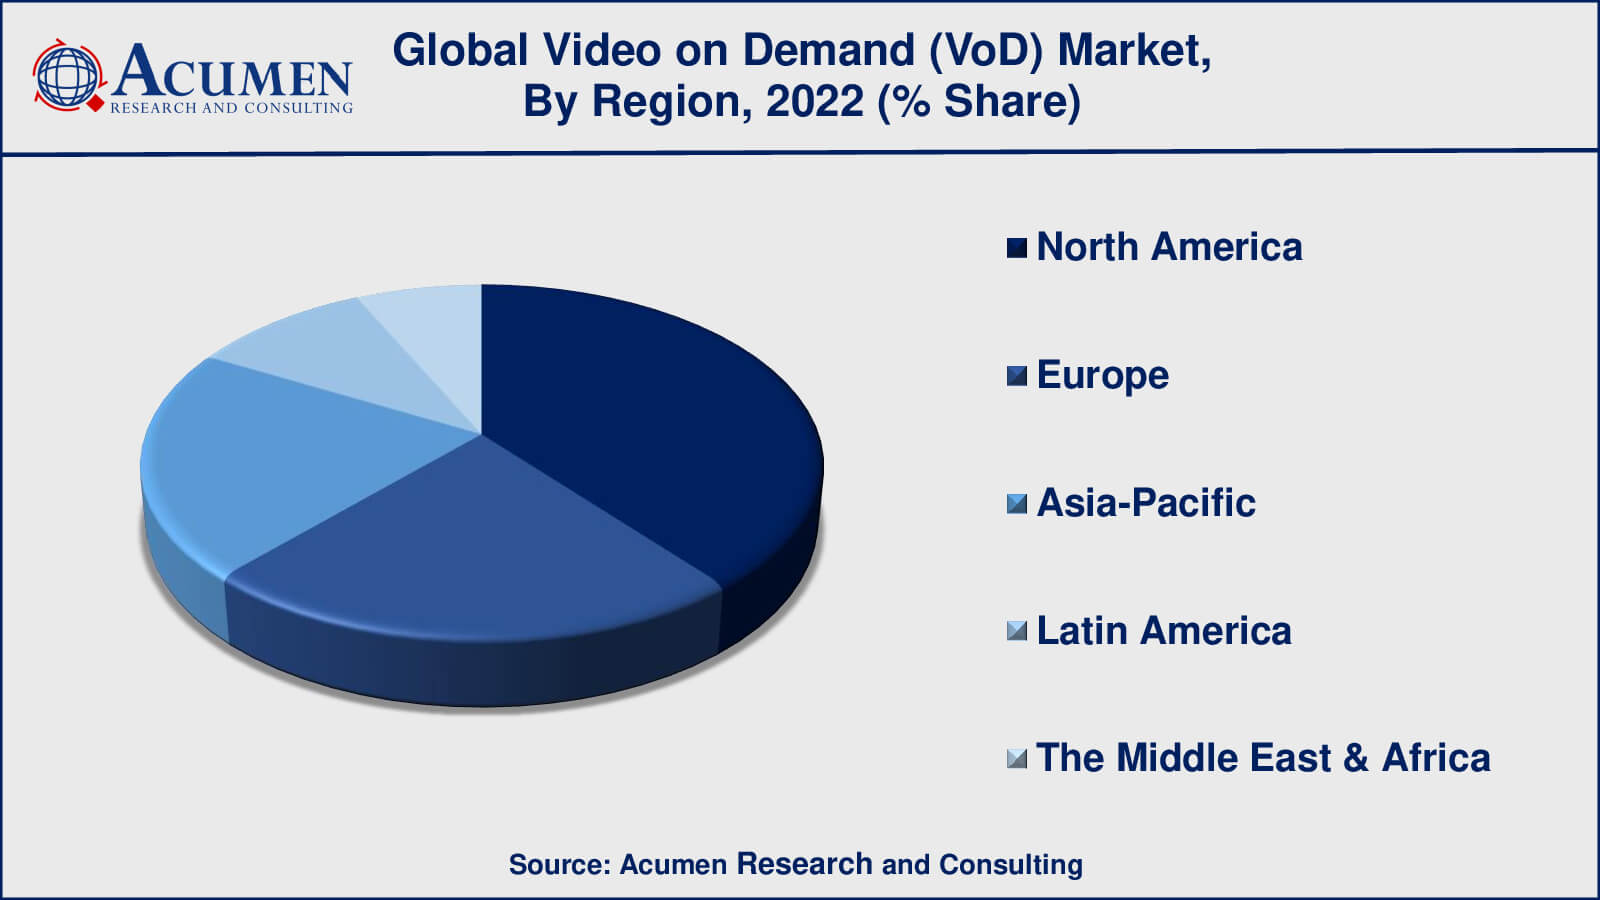 vod market share